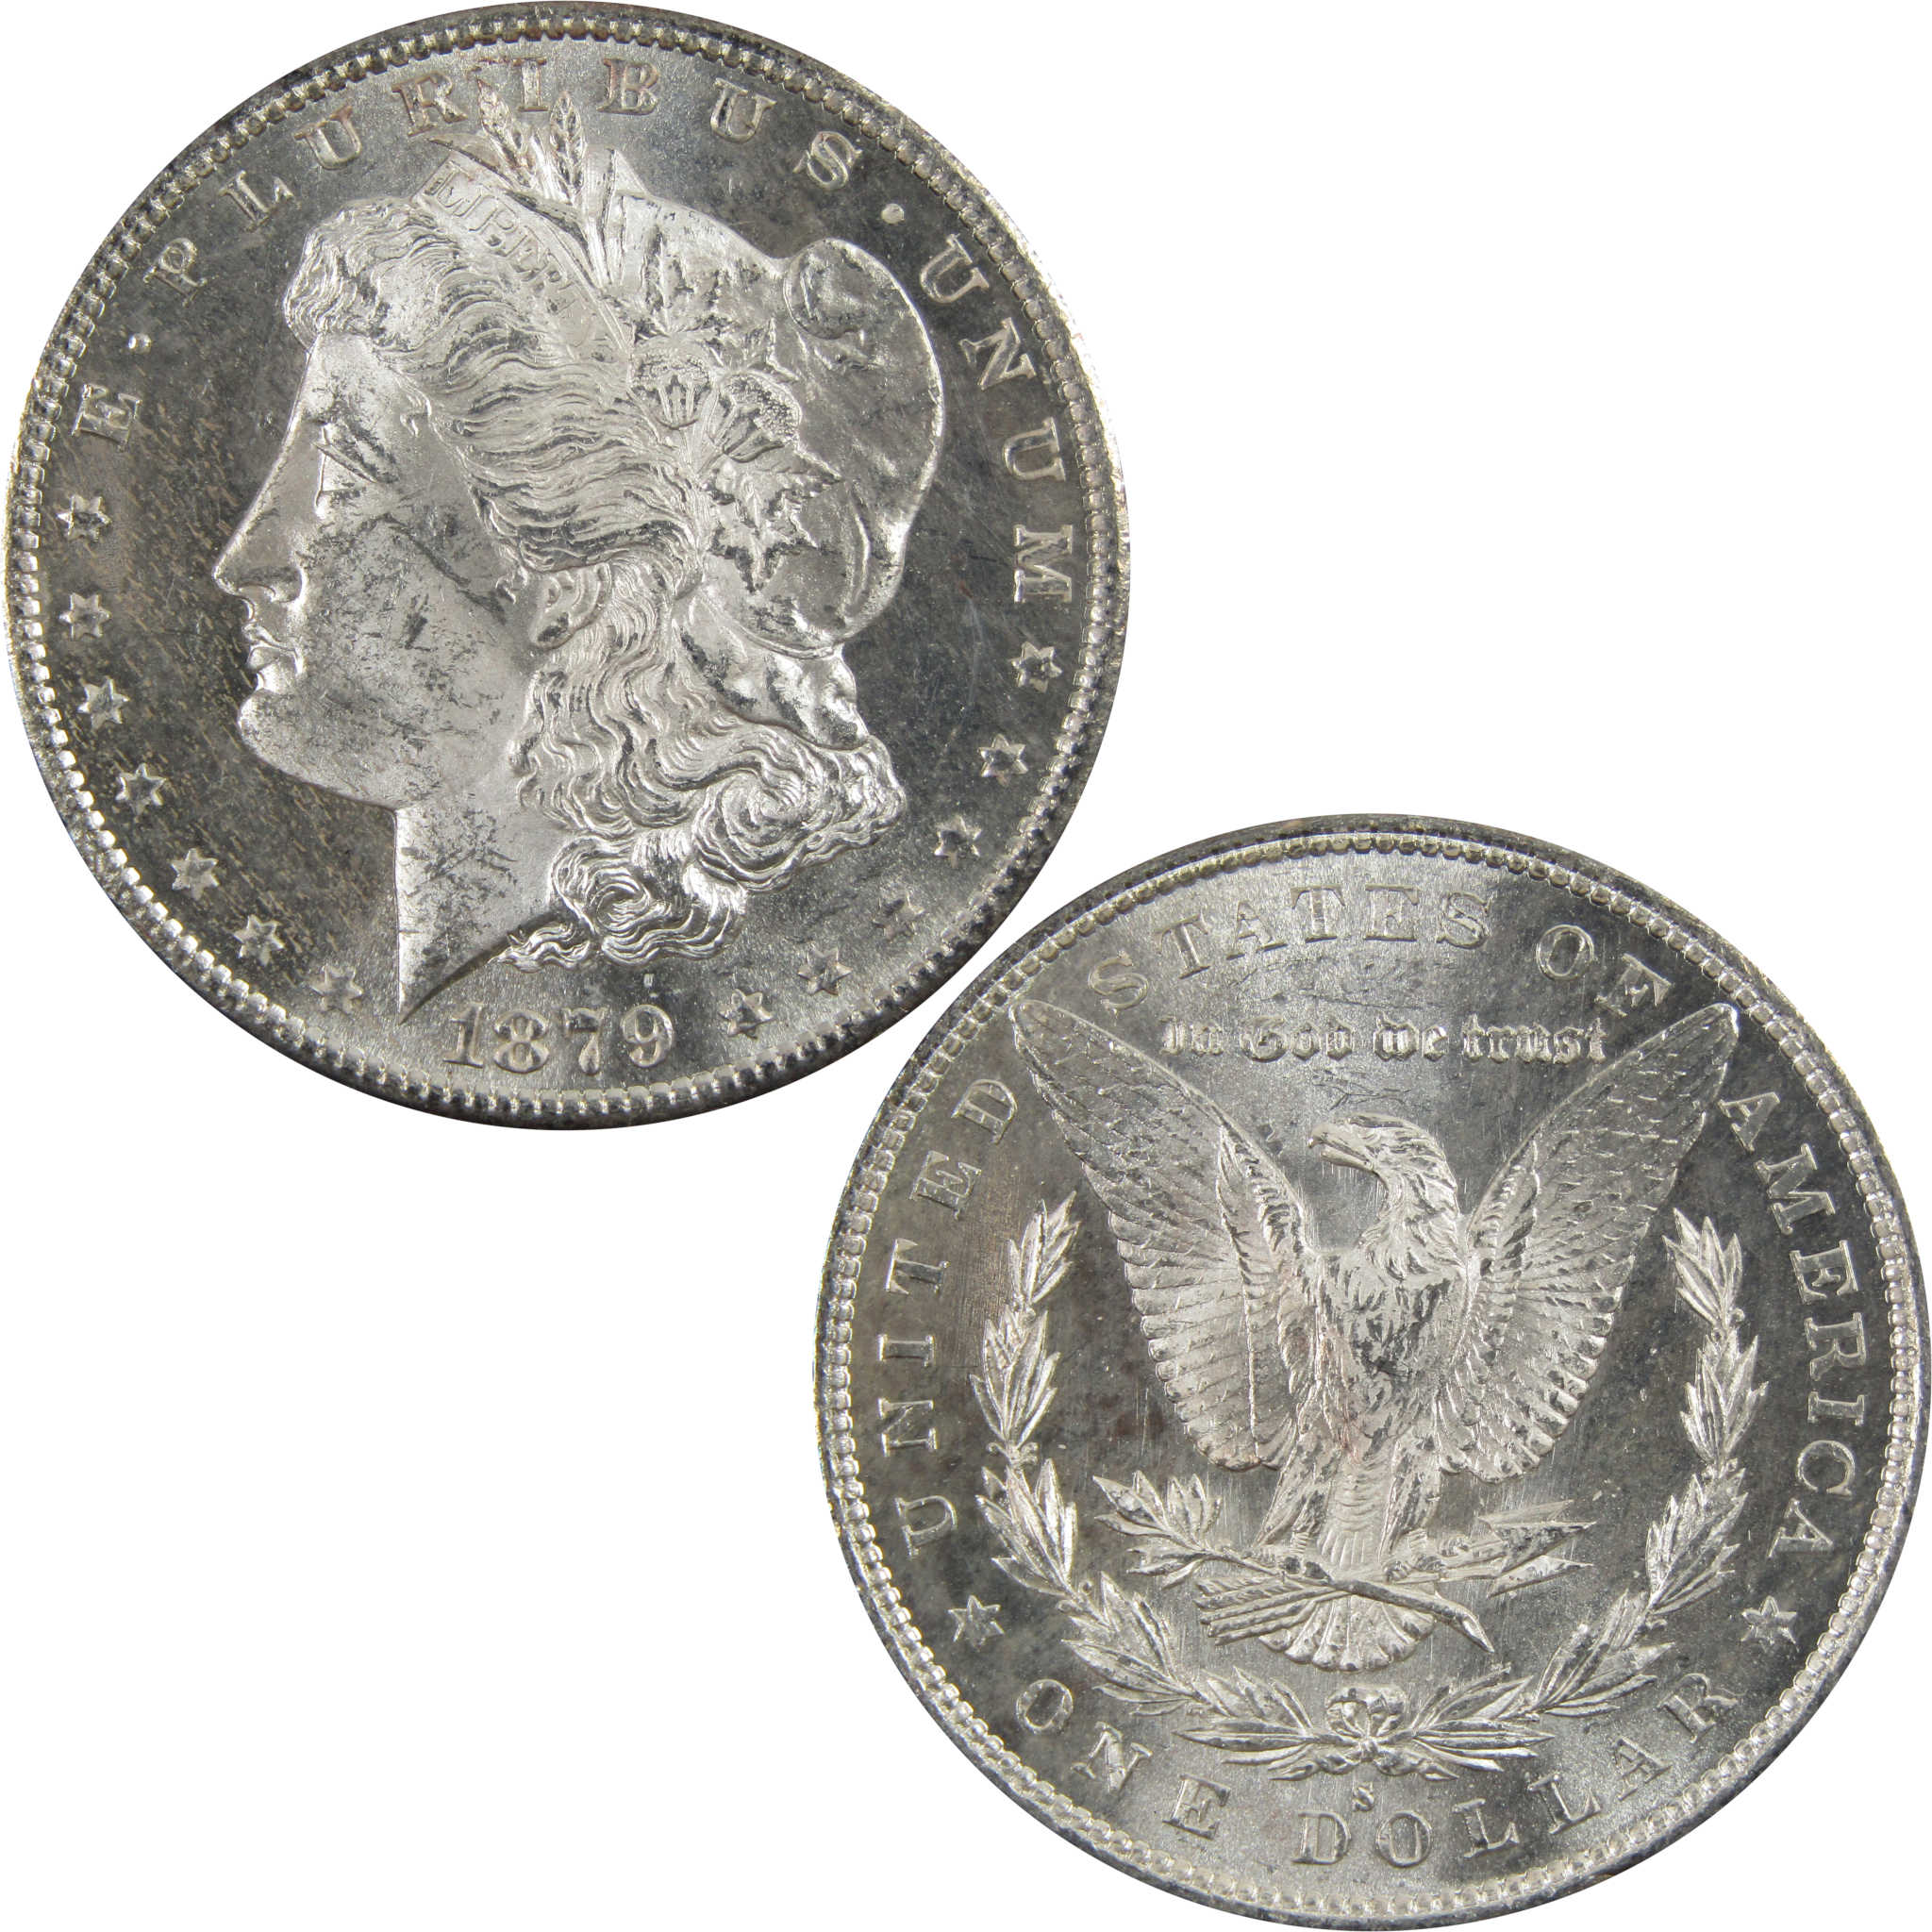 1879 S Morgan Dollar BU Uncirculated 90% Silver $1 Coin SKU:I5186 - Morgan coin - Morgan silver dollar - Morgan silver dollar for sale - Profile Coins &amp; Collectibles